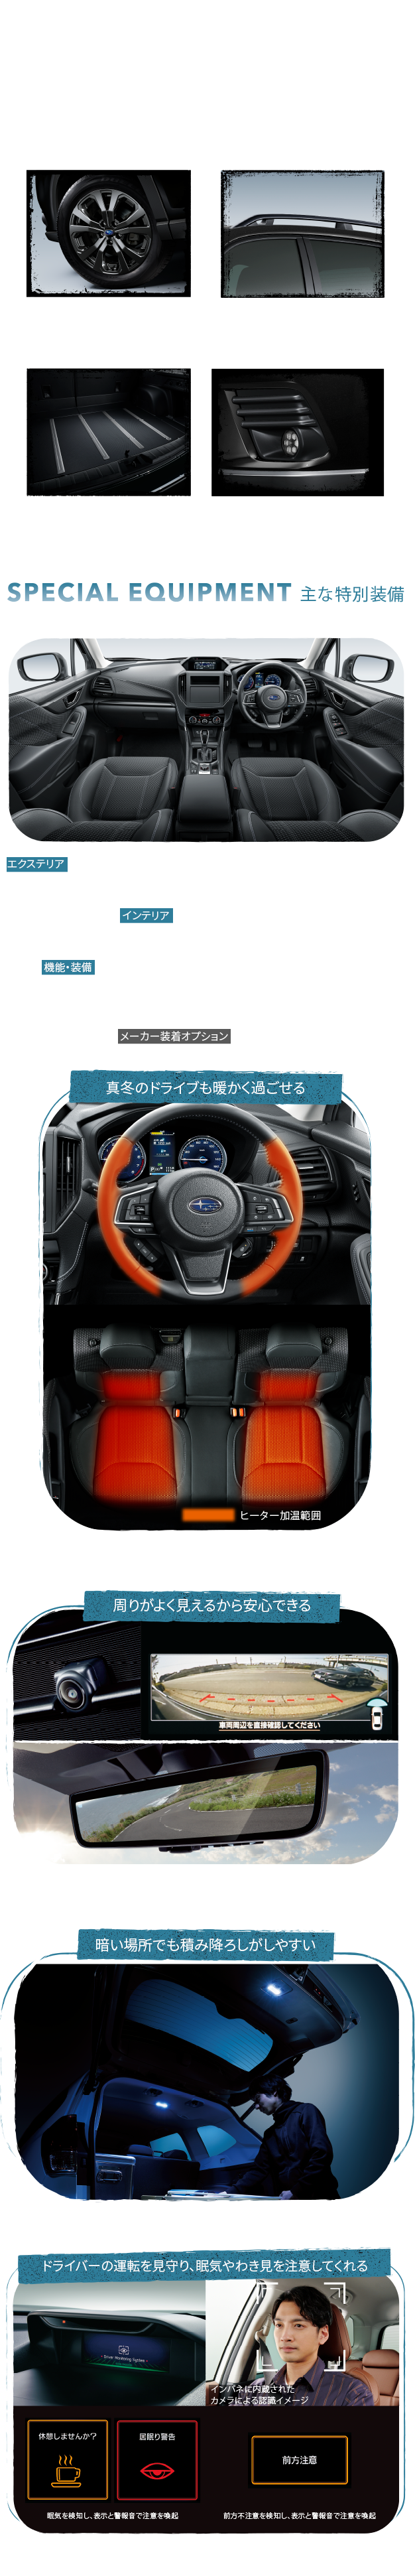 2.0L DOHC 直噴+モーター（e-BOXER）リニアトロニック　AWD（常時全輪駆動）メーカー希望小売価格（消費税10%込）3,377,000円消費税抜き価格　3,070,000円